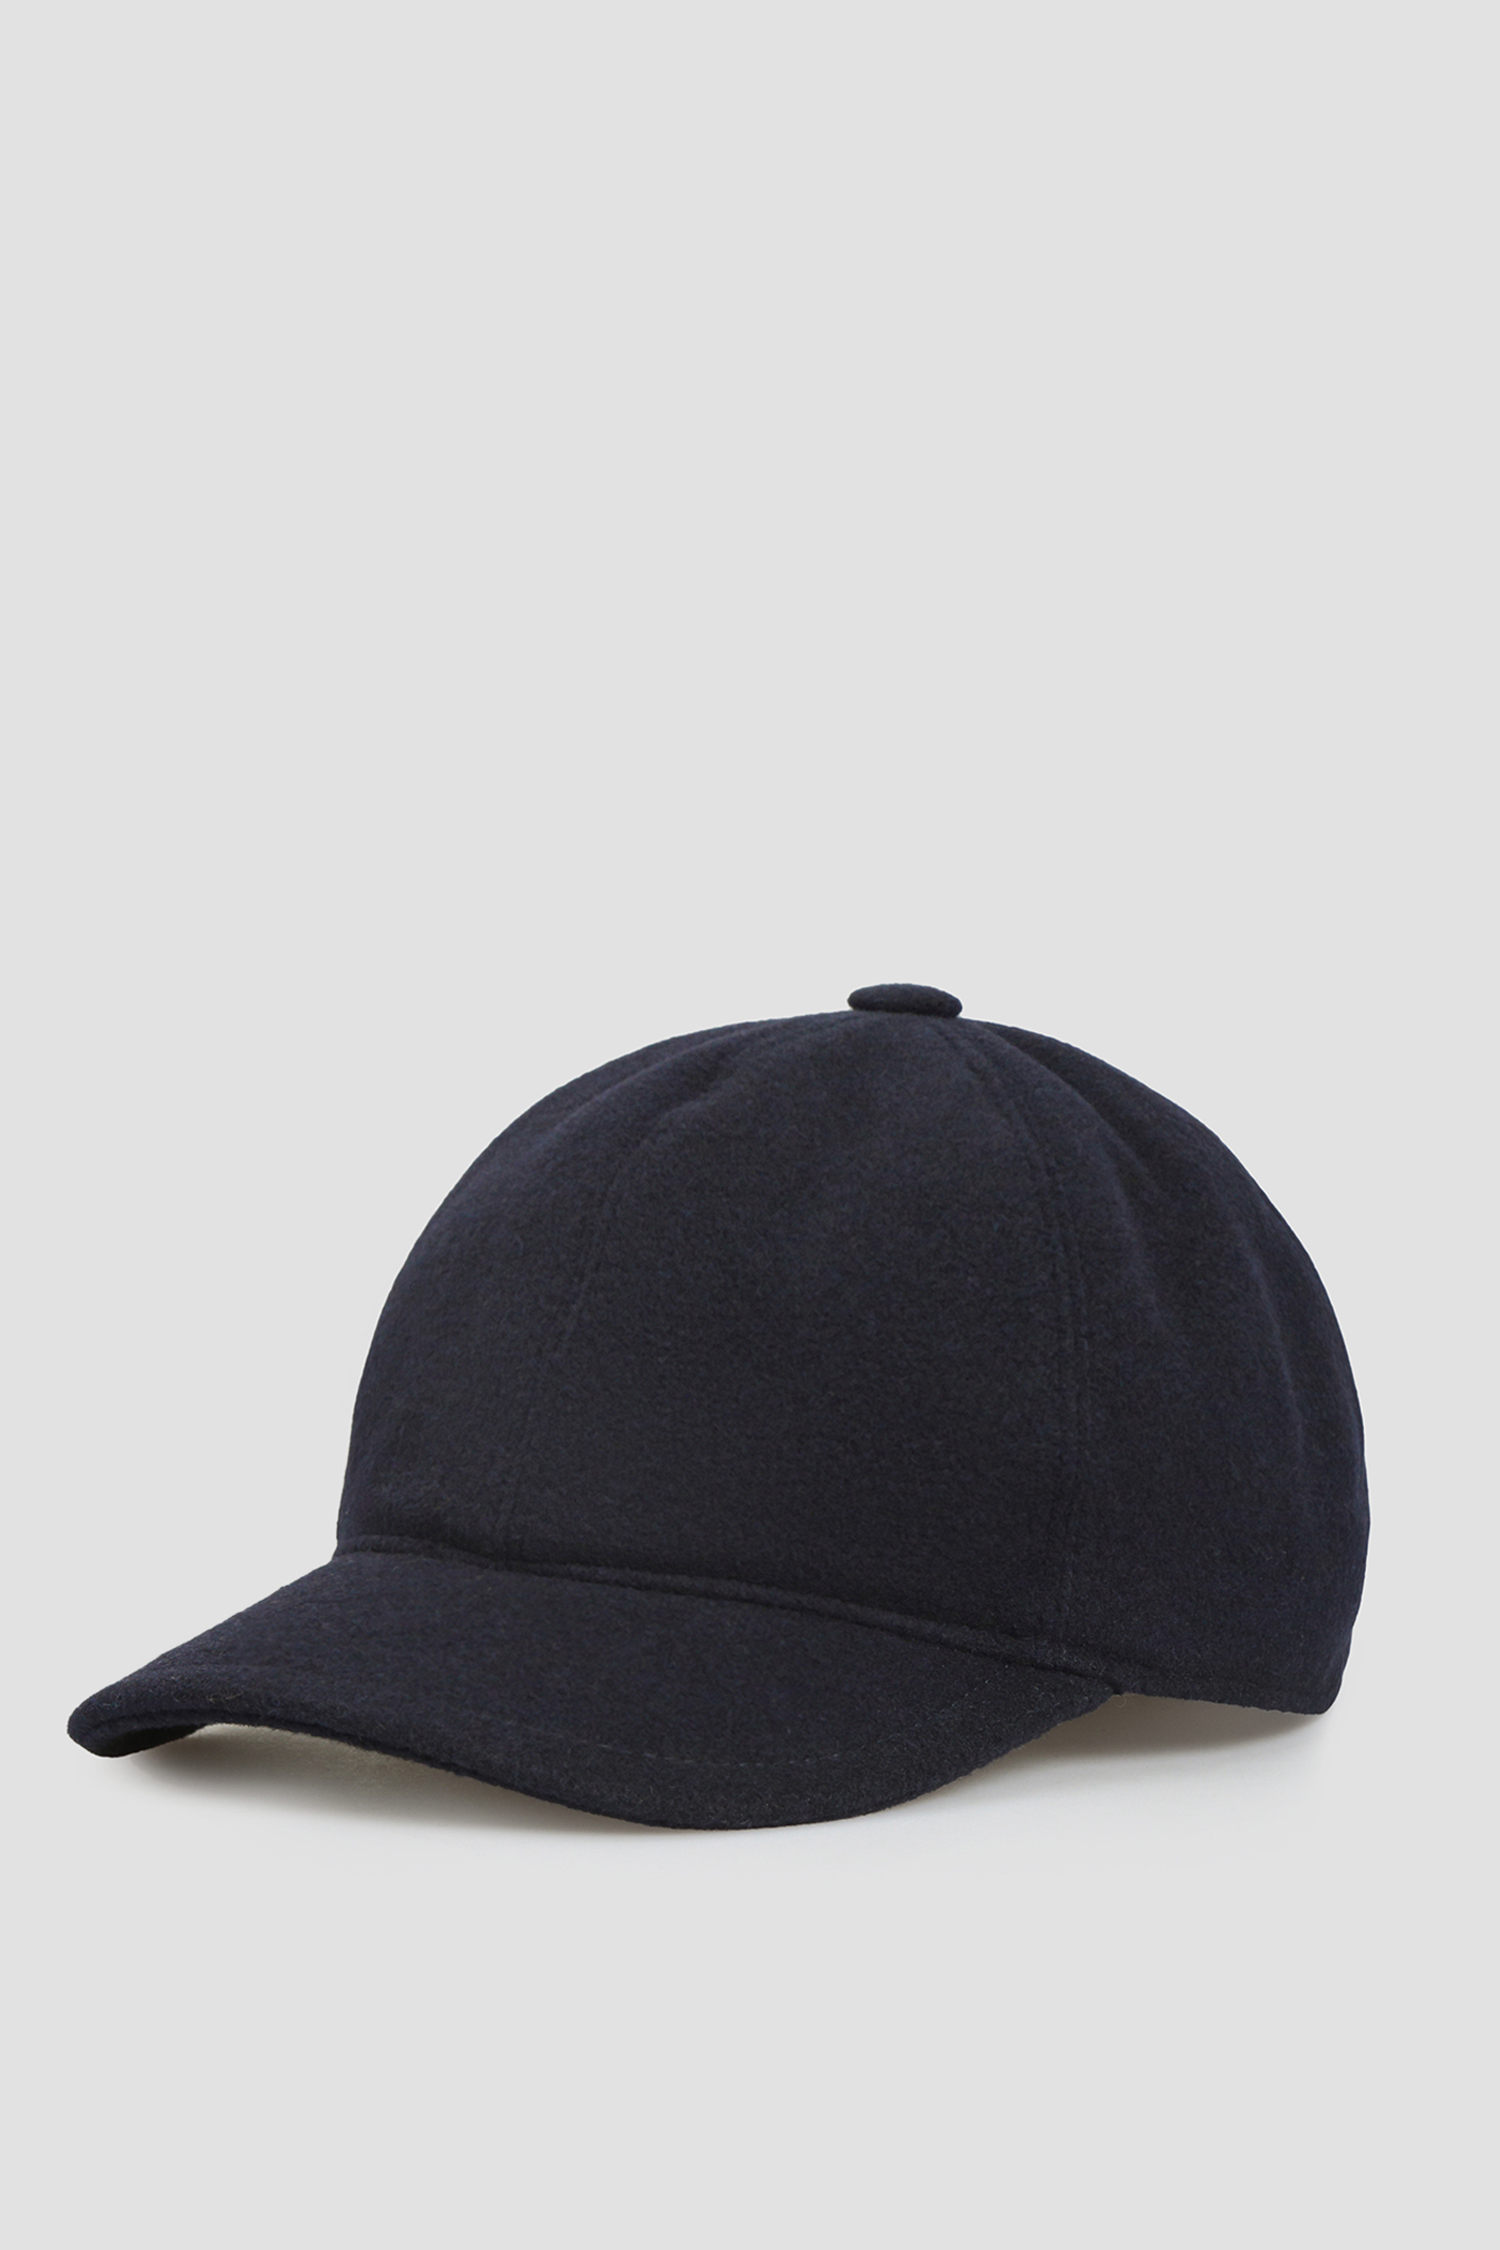 Темно-синяя шерстяная кепка для парней Baldinini M2B007LANA;1515